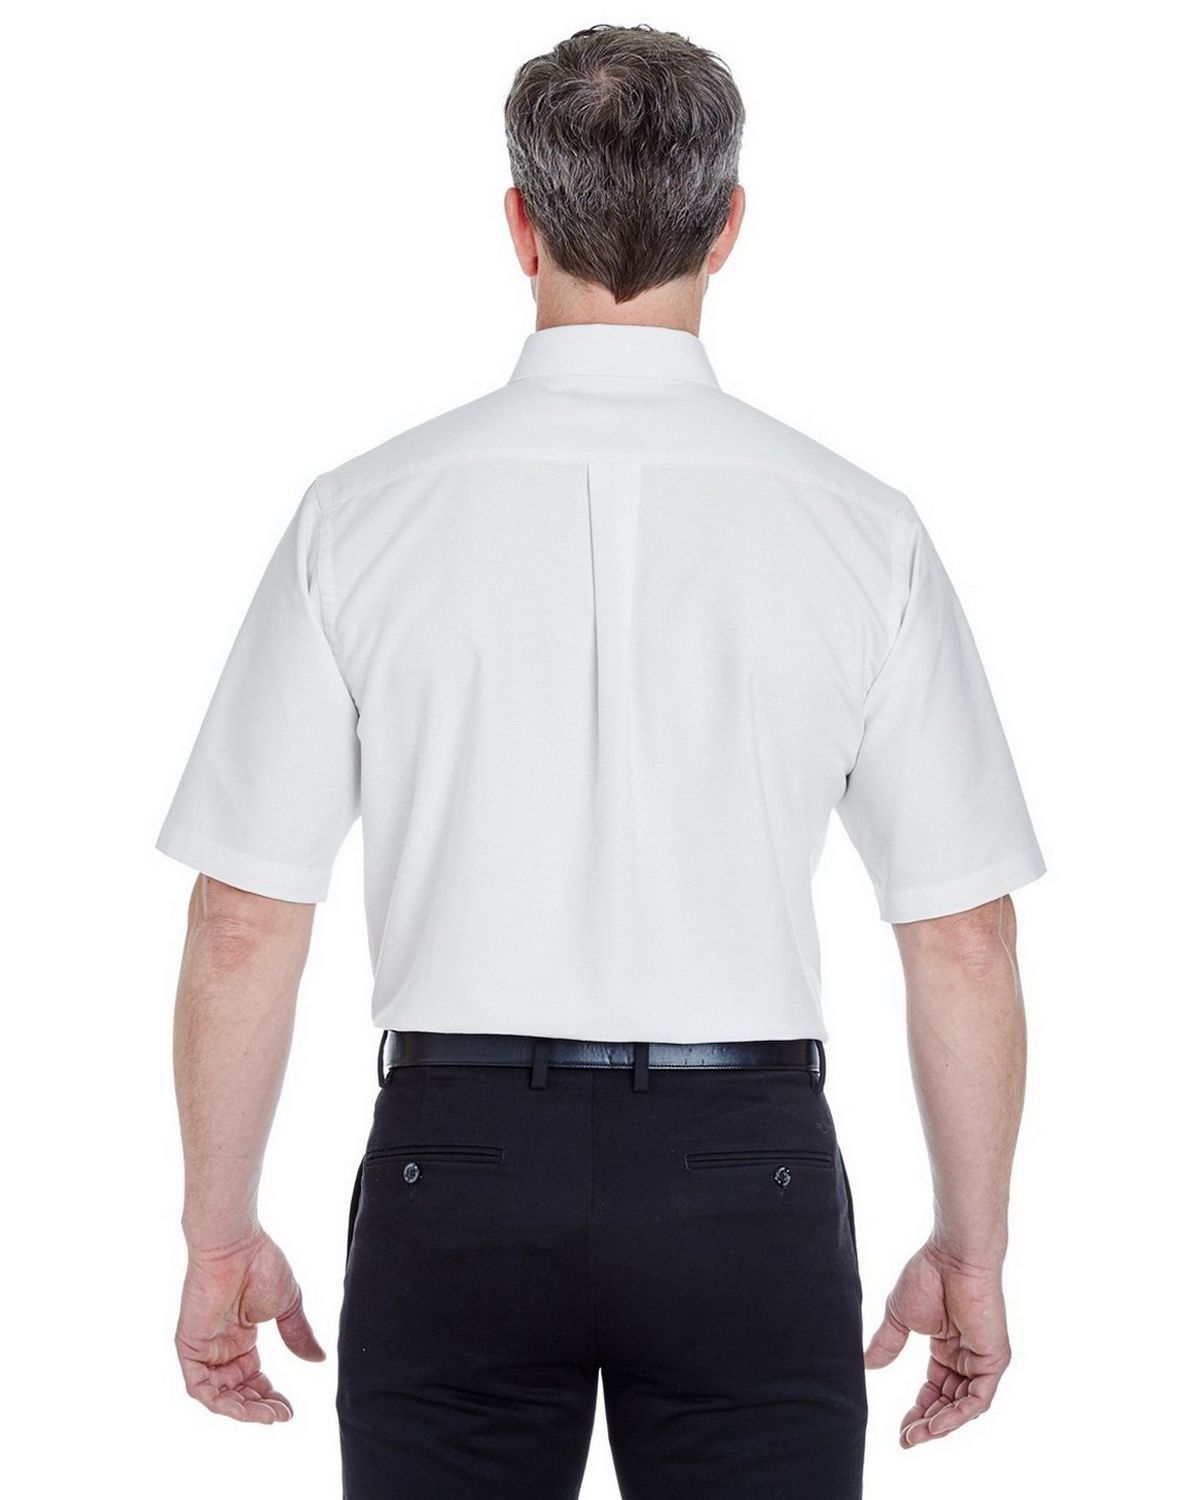 Logo Embroidered Short-Sleeve Oxford Dress Shirt - For Men